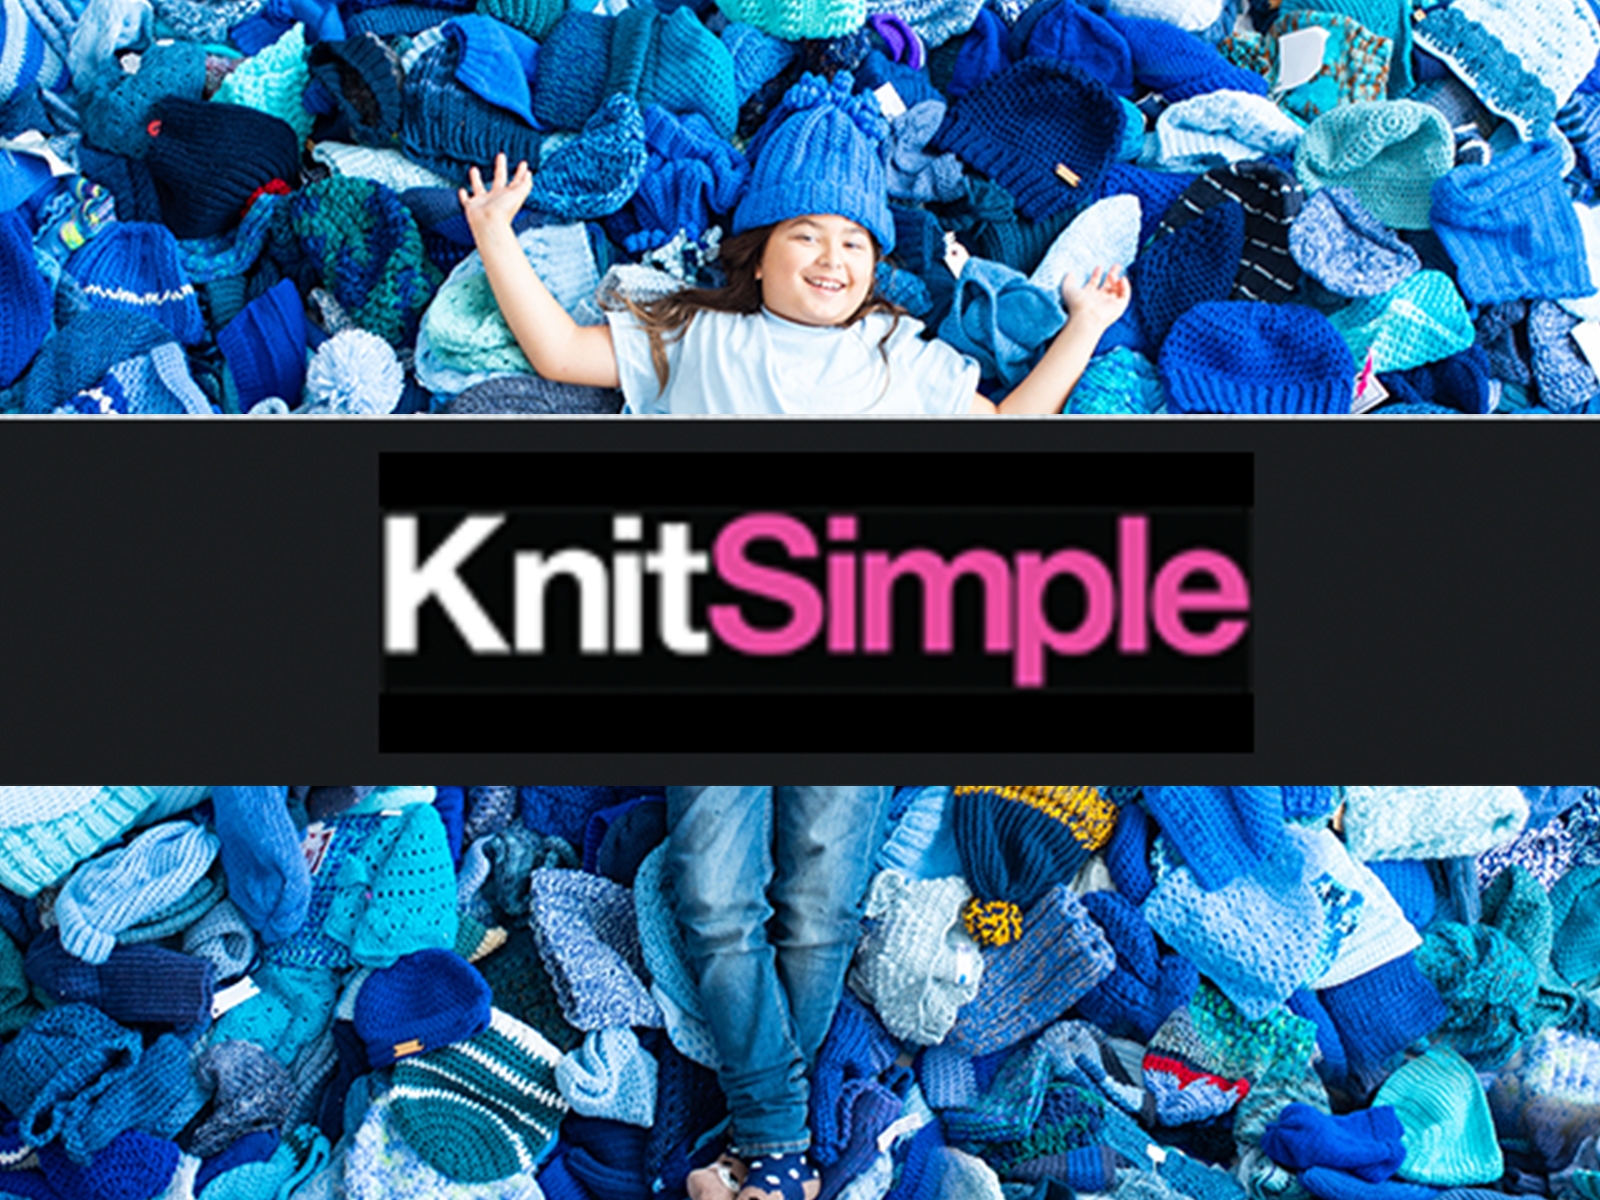 KnitSimple logo overlaid on image of smiling girl laying on pile of blue hats